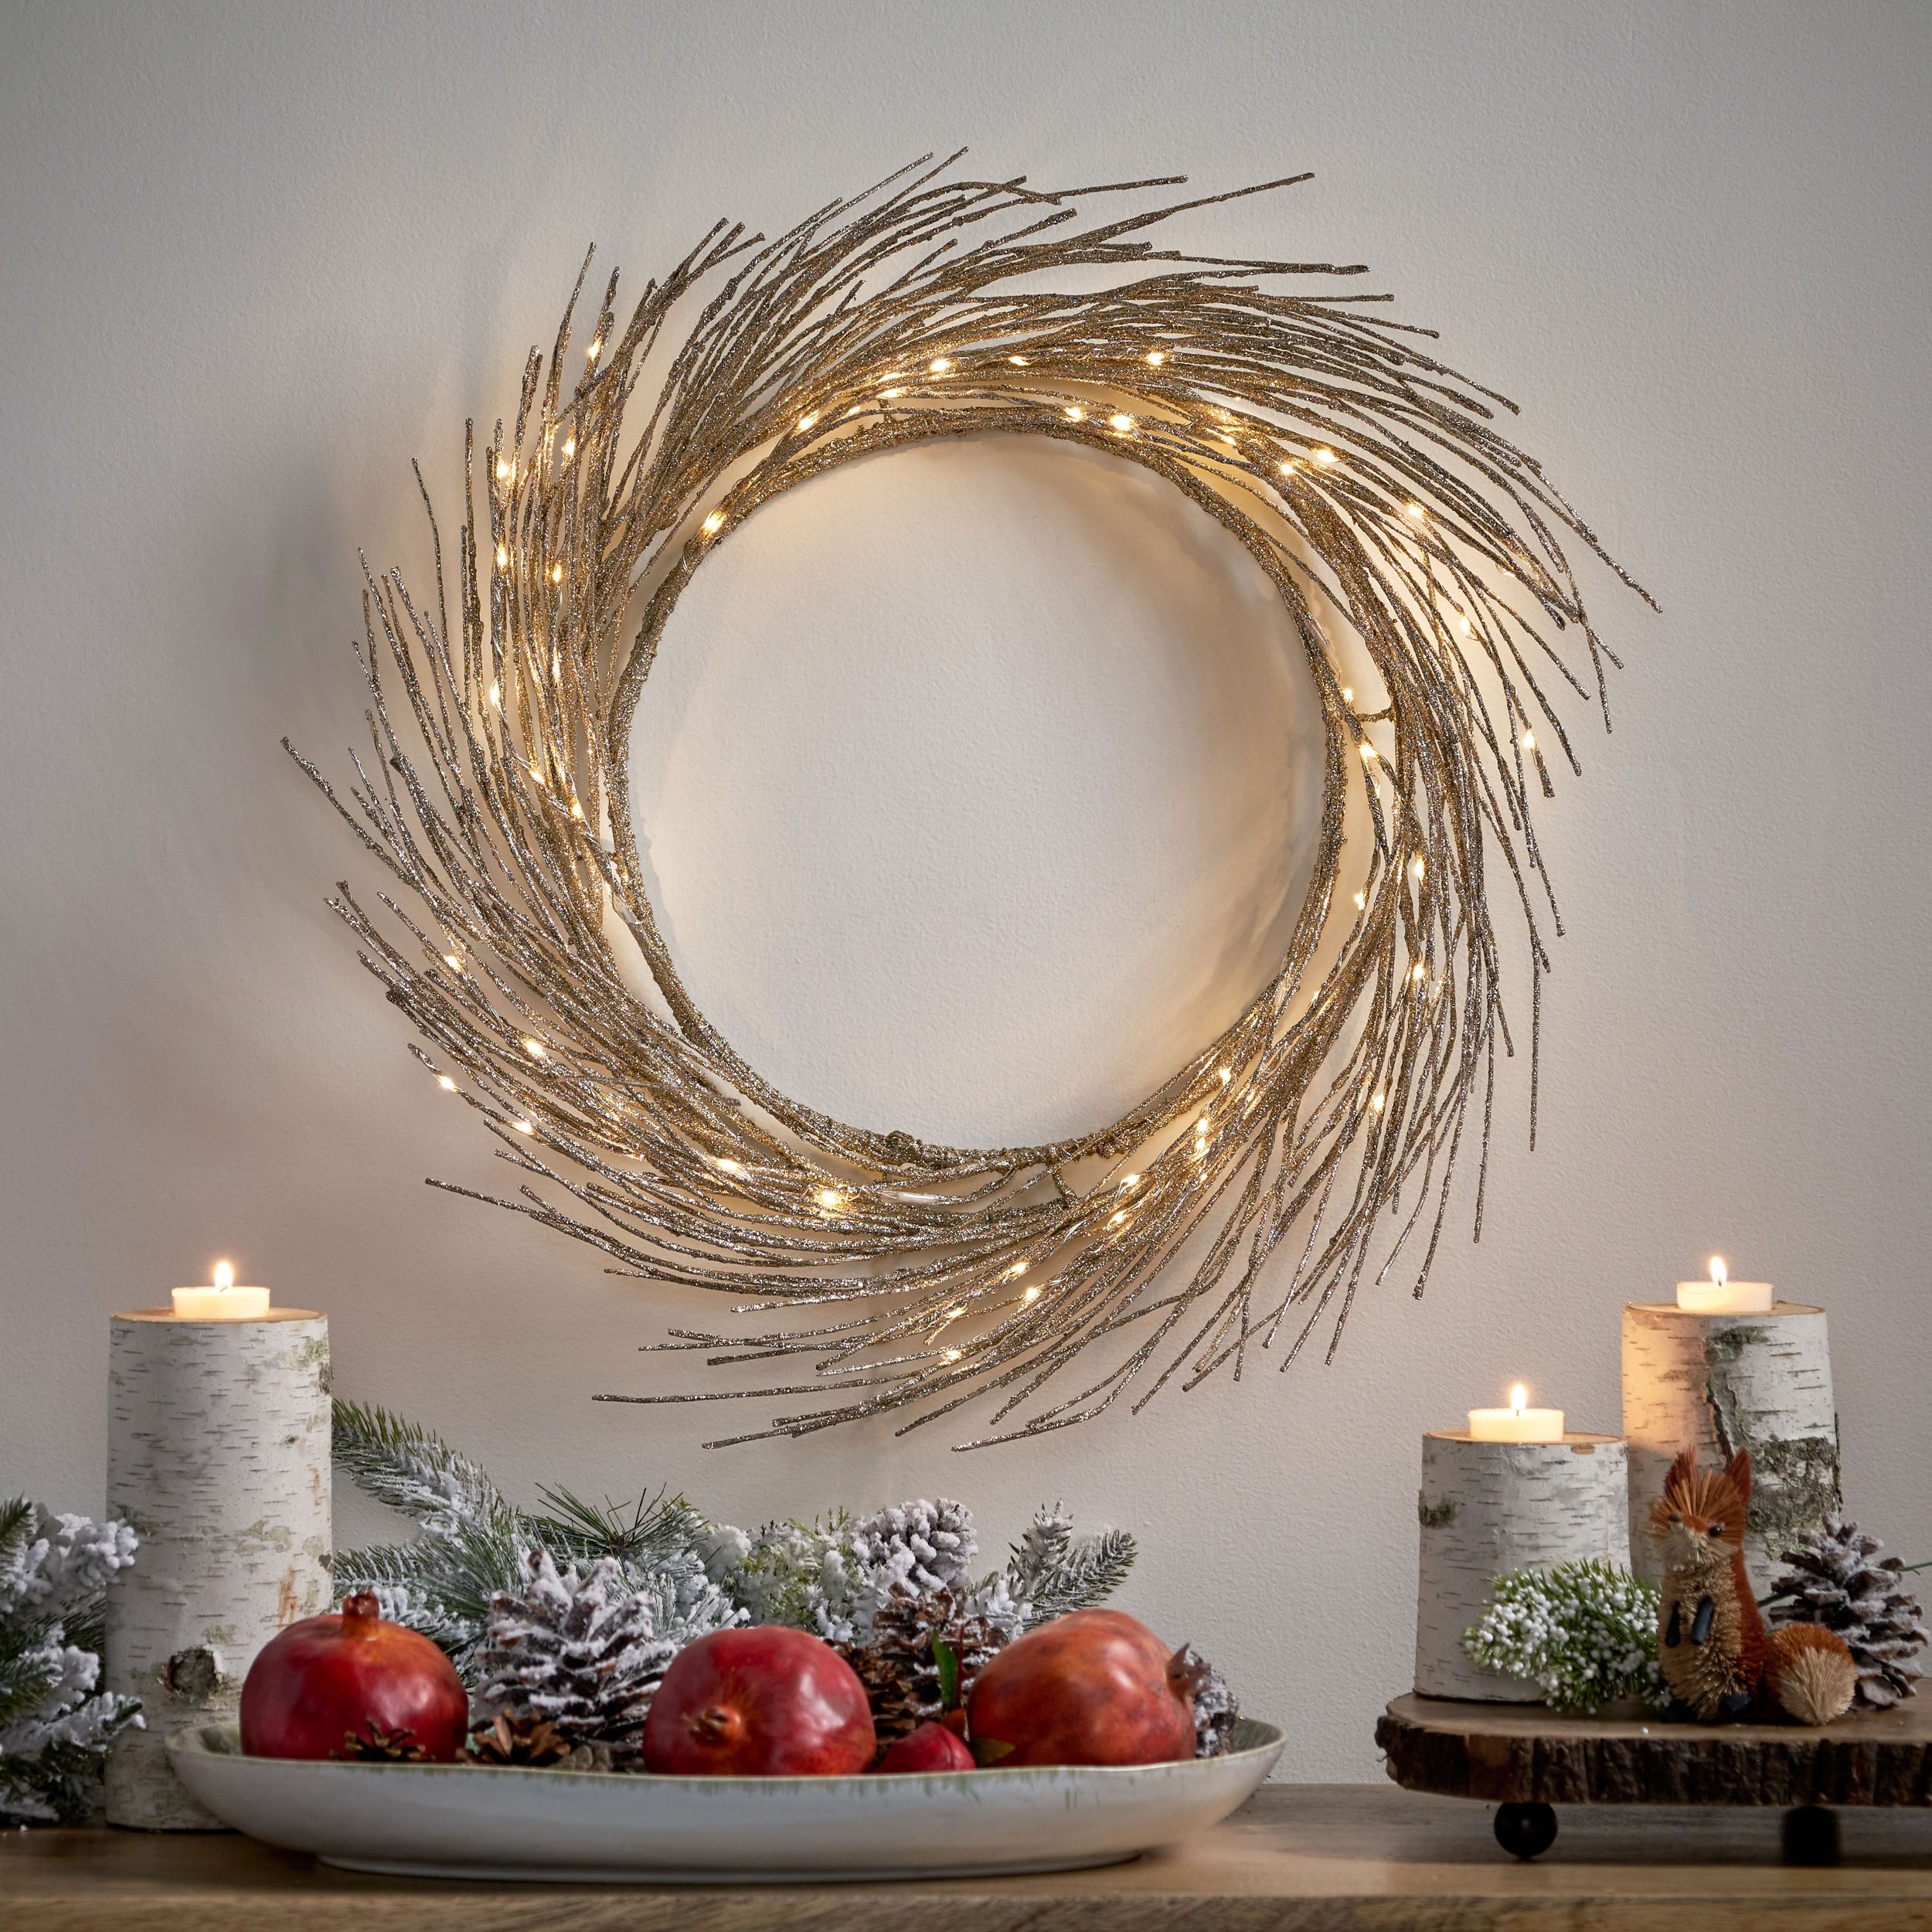 2021 Sparkling White Hallmark Christmas Wreath - Hooked on Hallmark  Ornaments